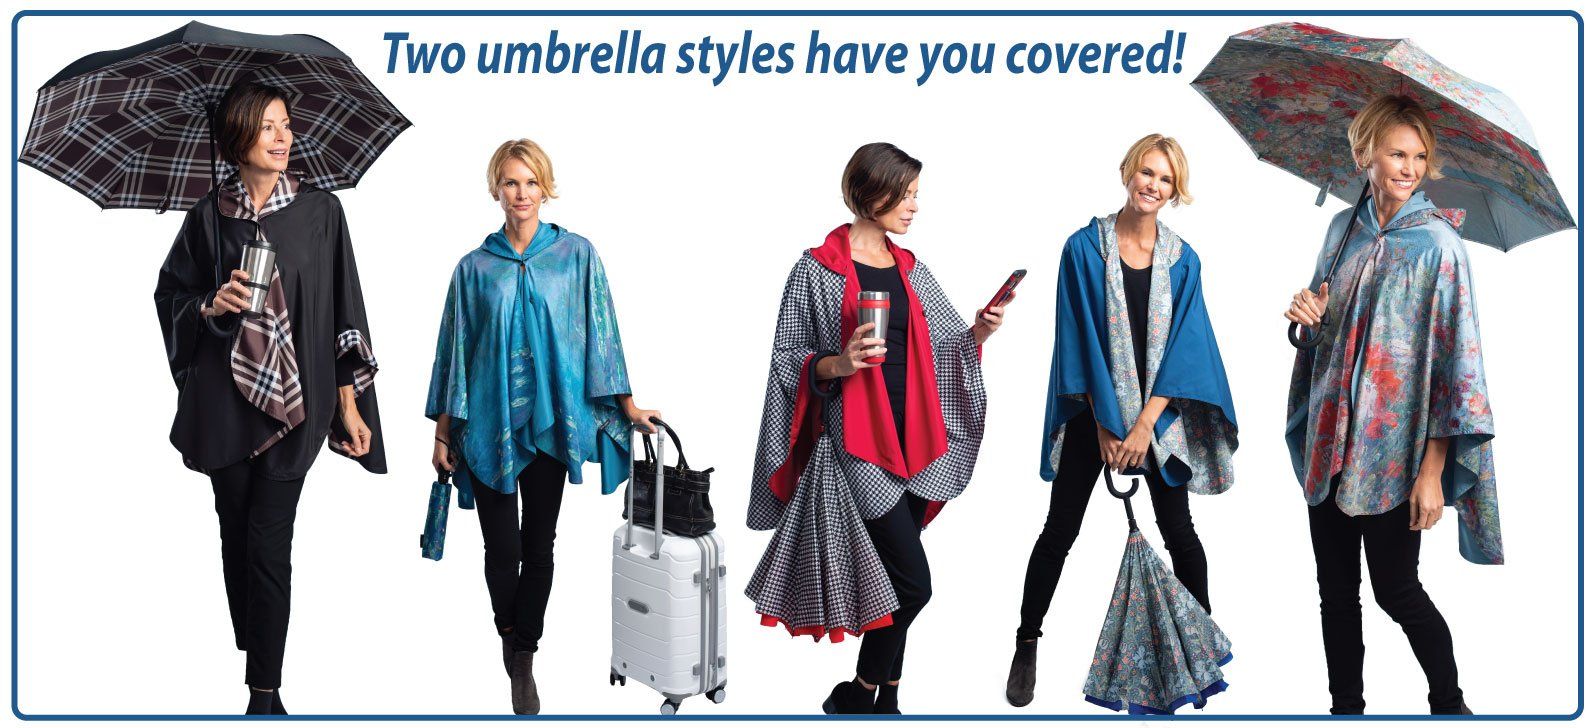 Small Sun Umbrella For Walking Light Compact Folded Umbrellas Purse Size  for Women : Amazon.com.au: Clothing, Shoes & Accessories